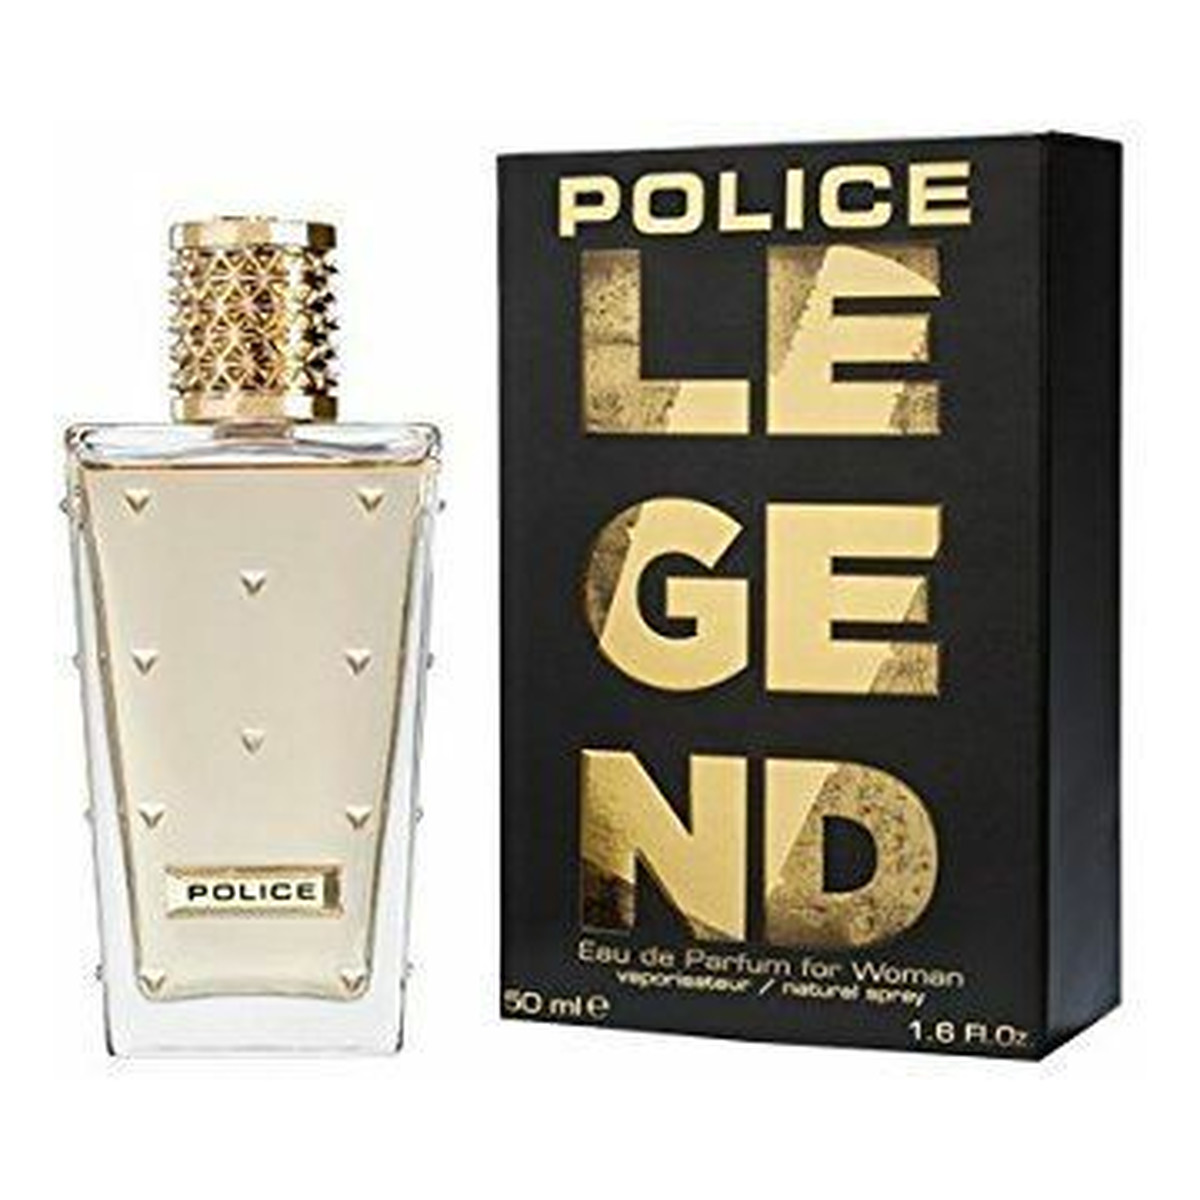 Police The Legendary Scent For Woman woda perfumowana 50ml